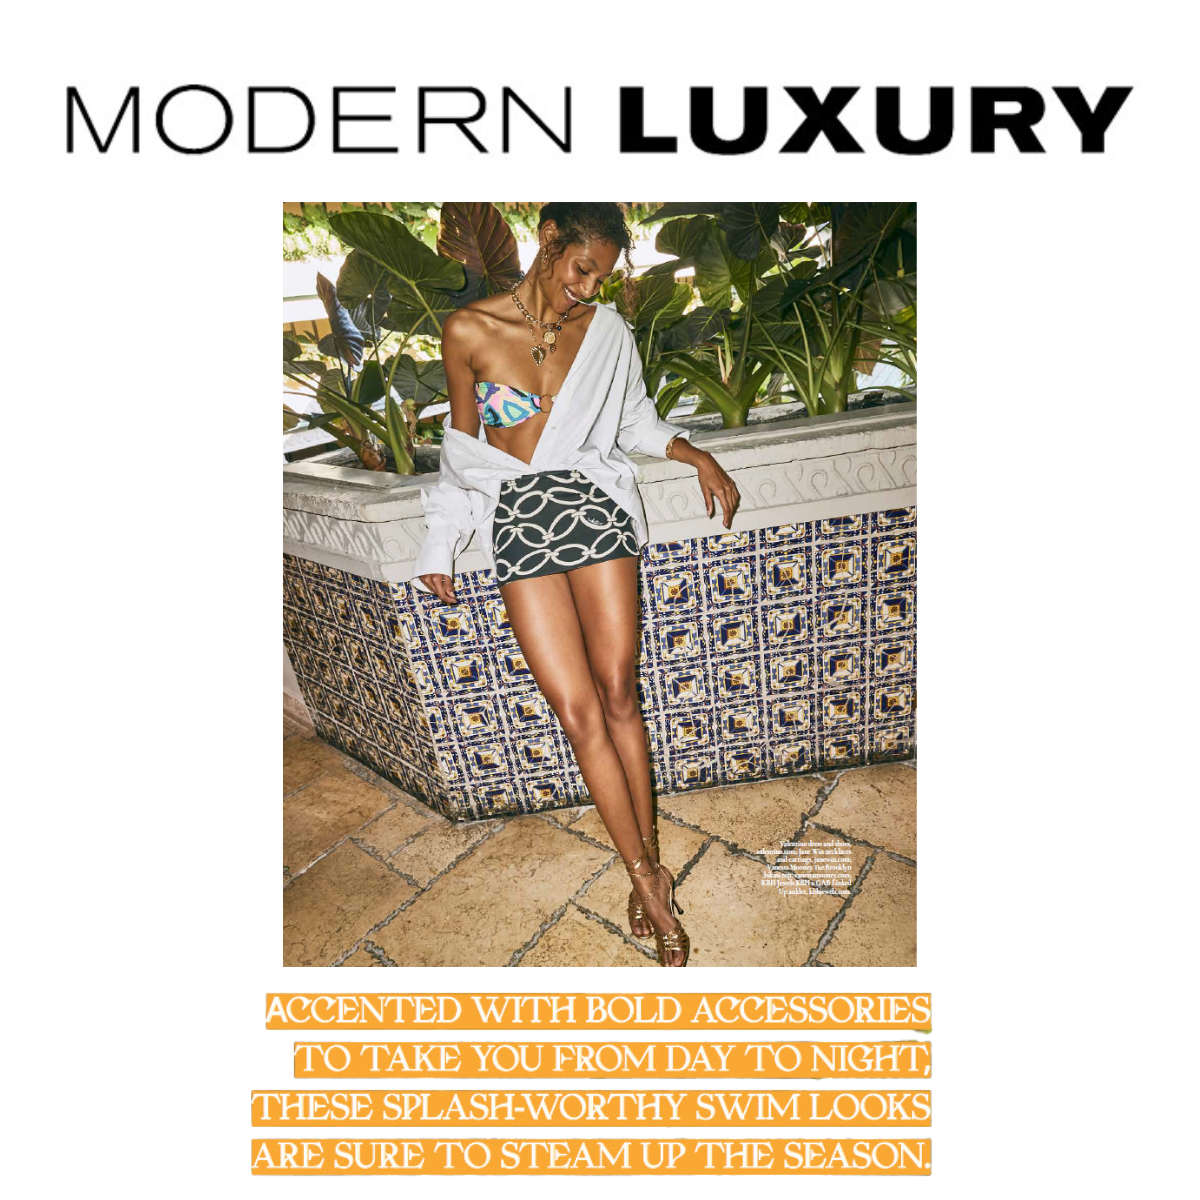 Press Highlight: Modern Luxury 'Heat Wave' Accessories for Summer